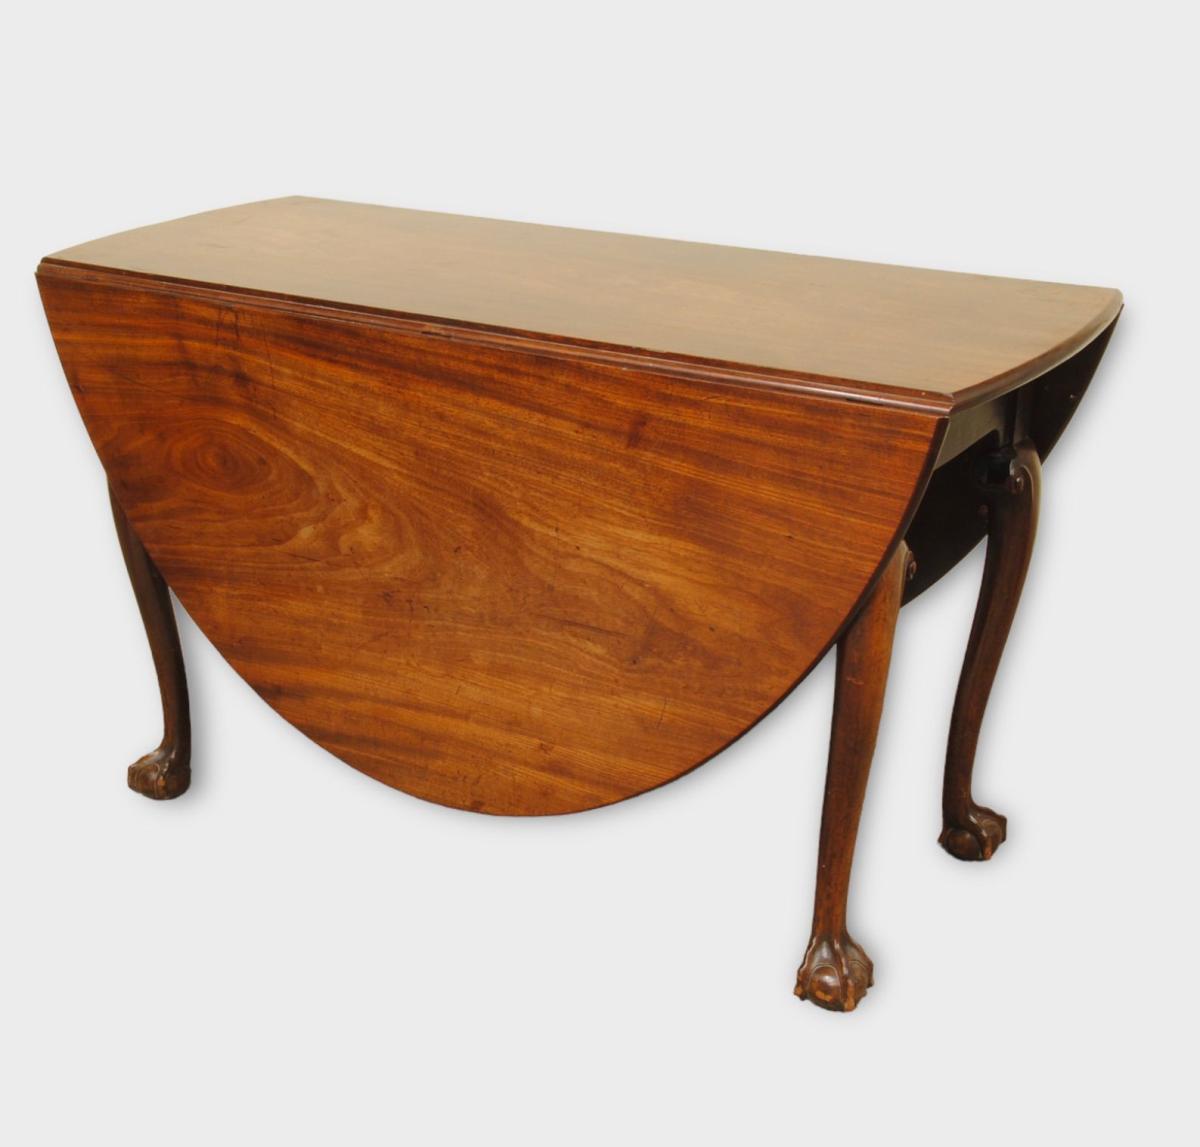 18th Century Oval Gateleg Table